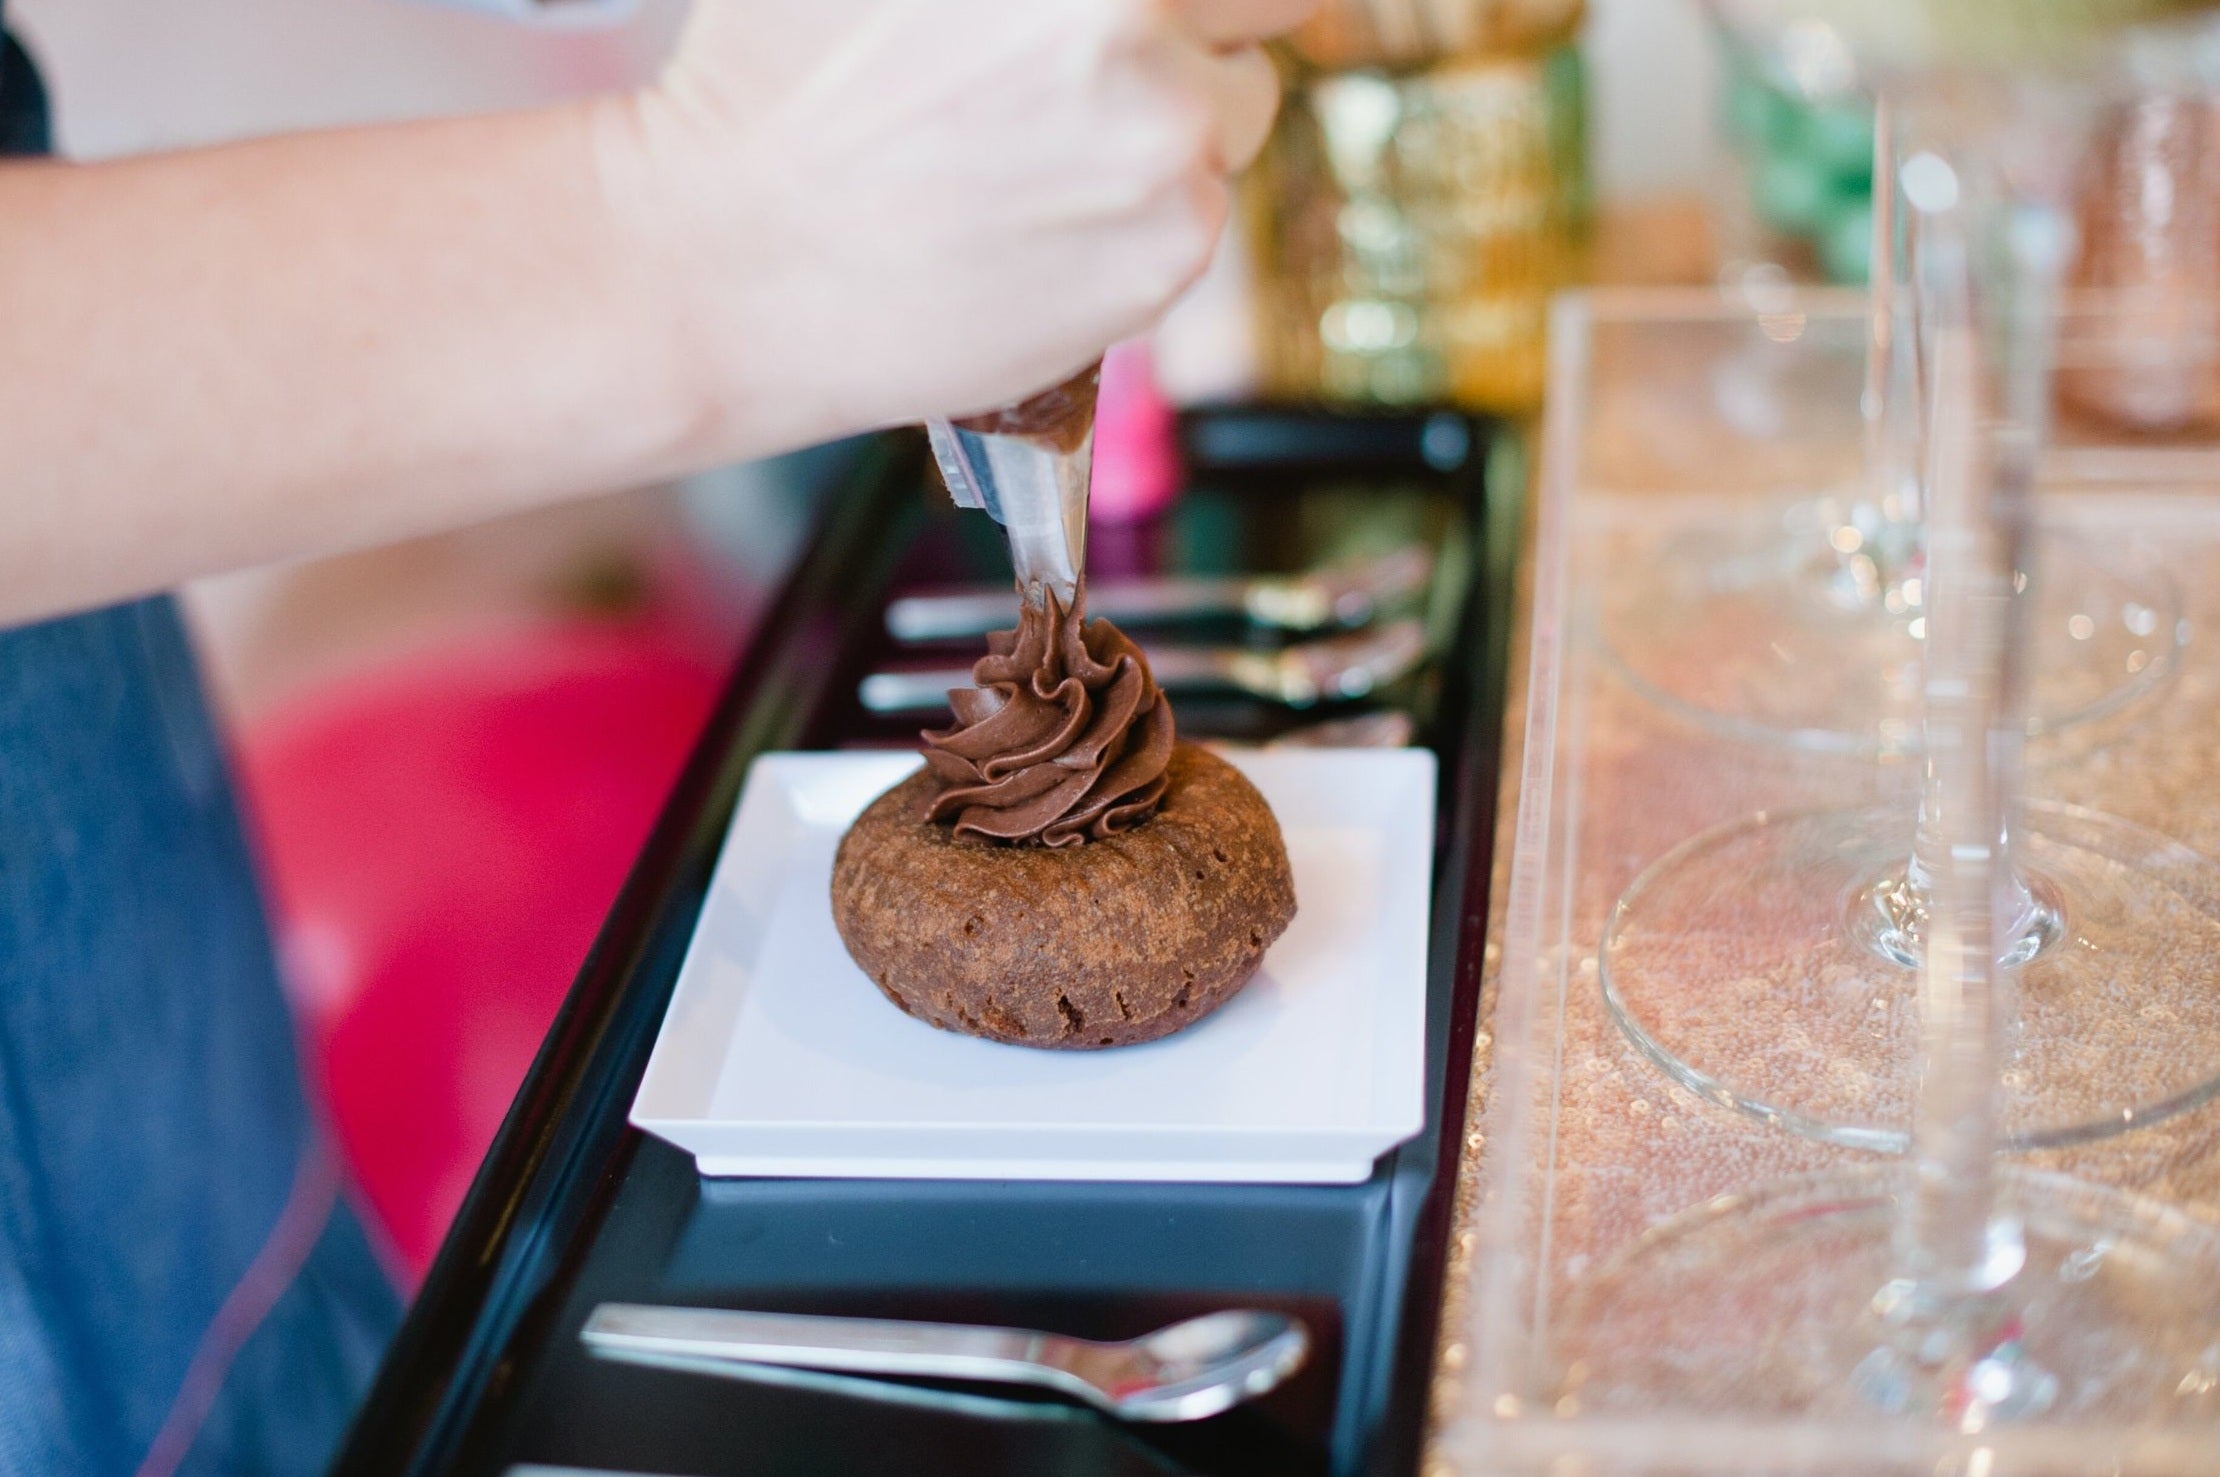 Customize your own edible masterpiece at our Doughnut Bar